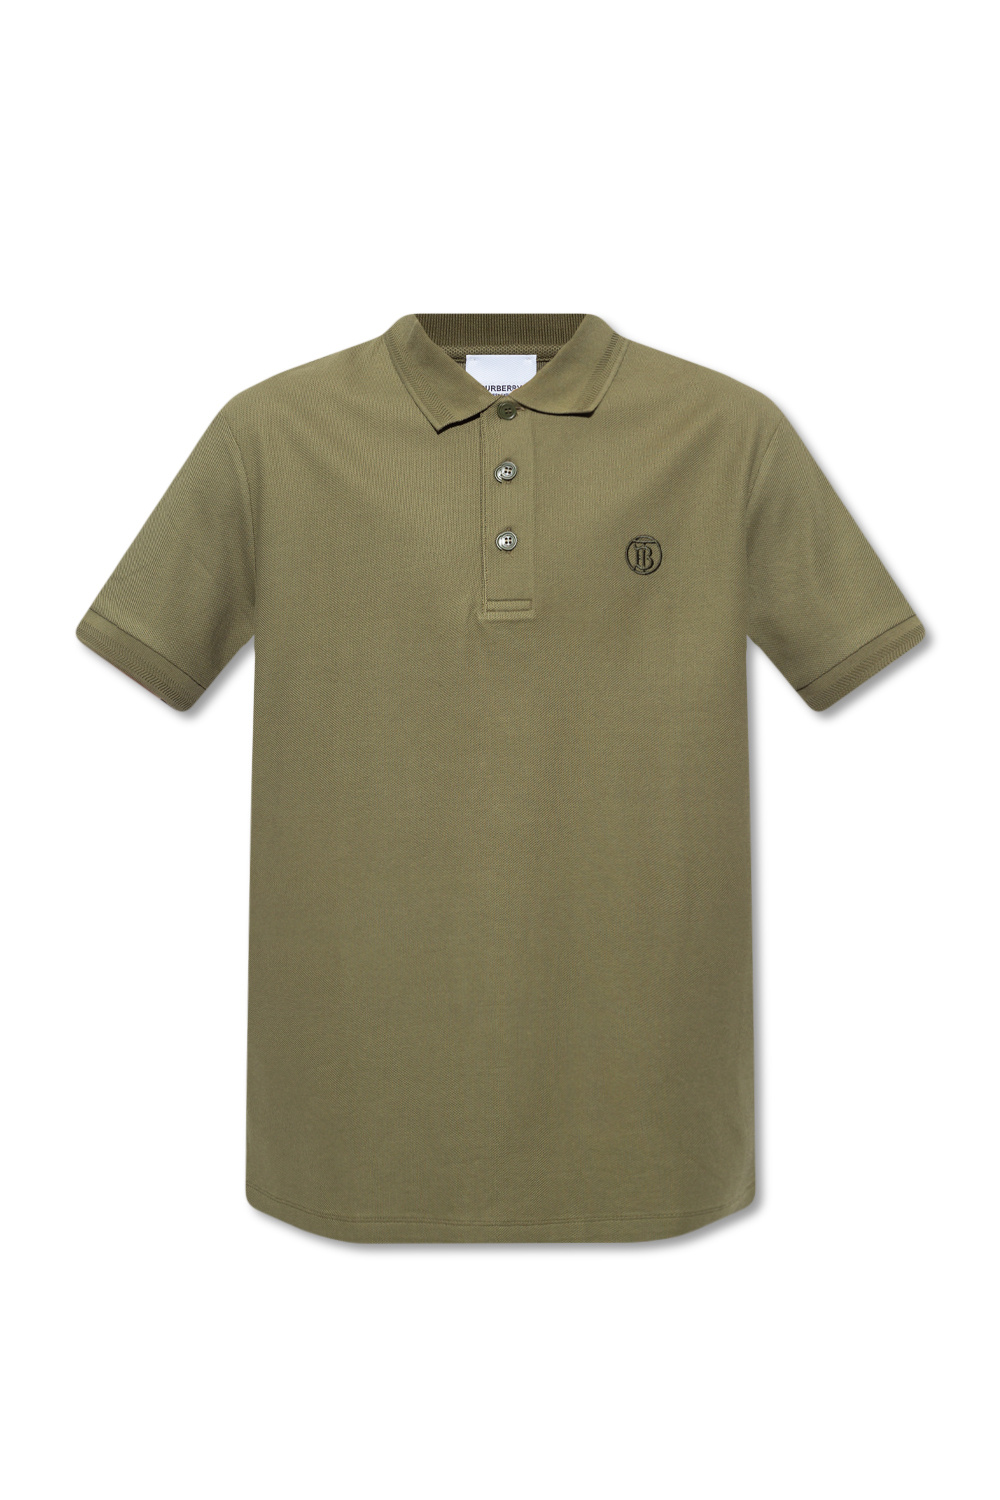 Burberry ‘Eddie’ polo Barbour shirt with logo